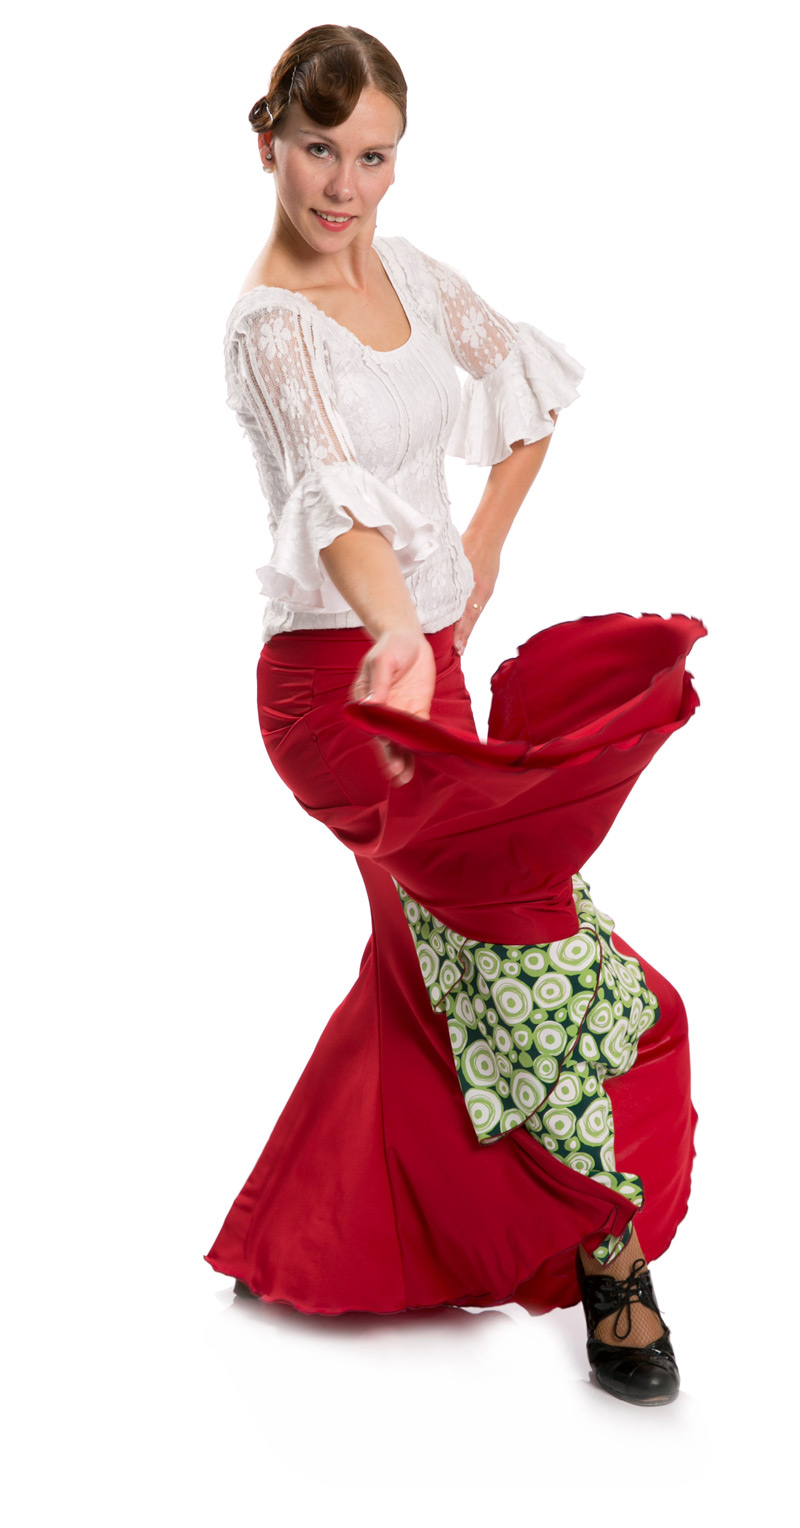 Flamenco dancing skirt with 3 godets - El rocio Flamenco dance